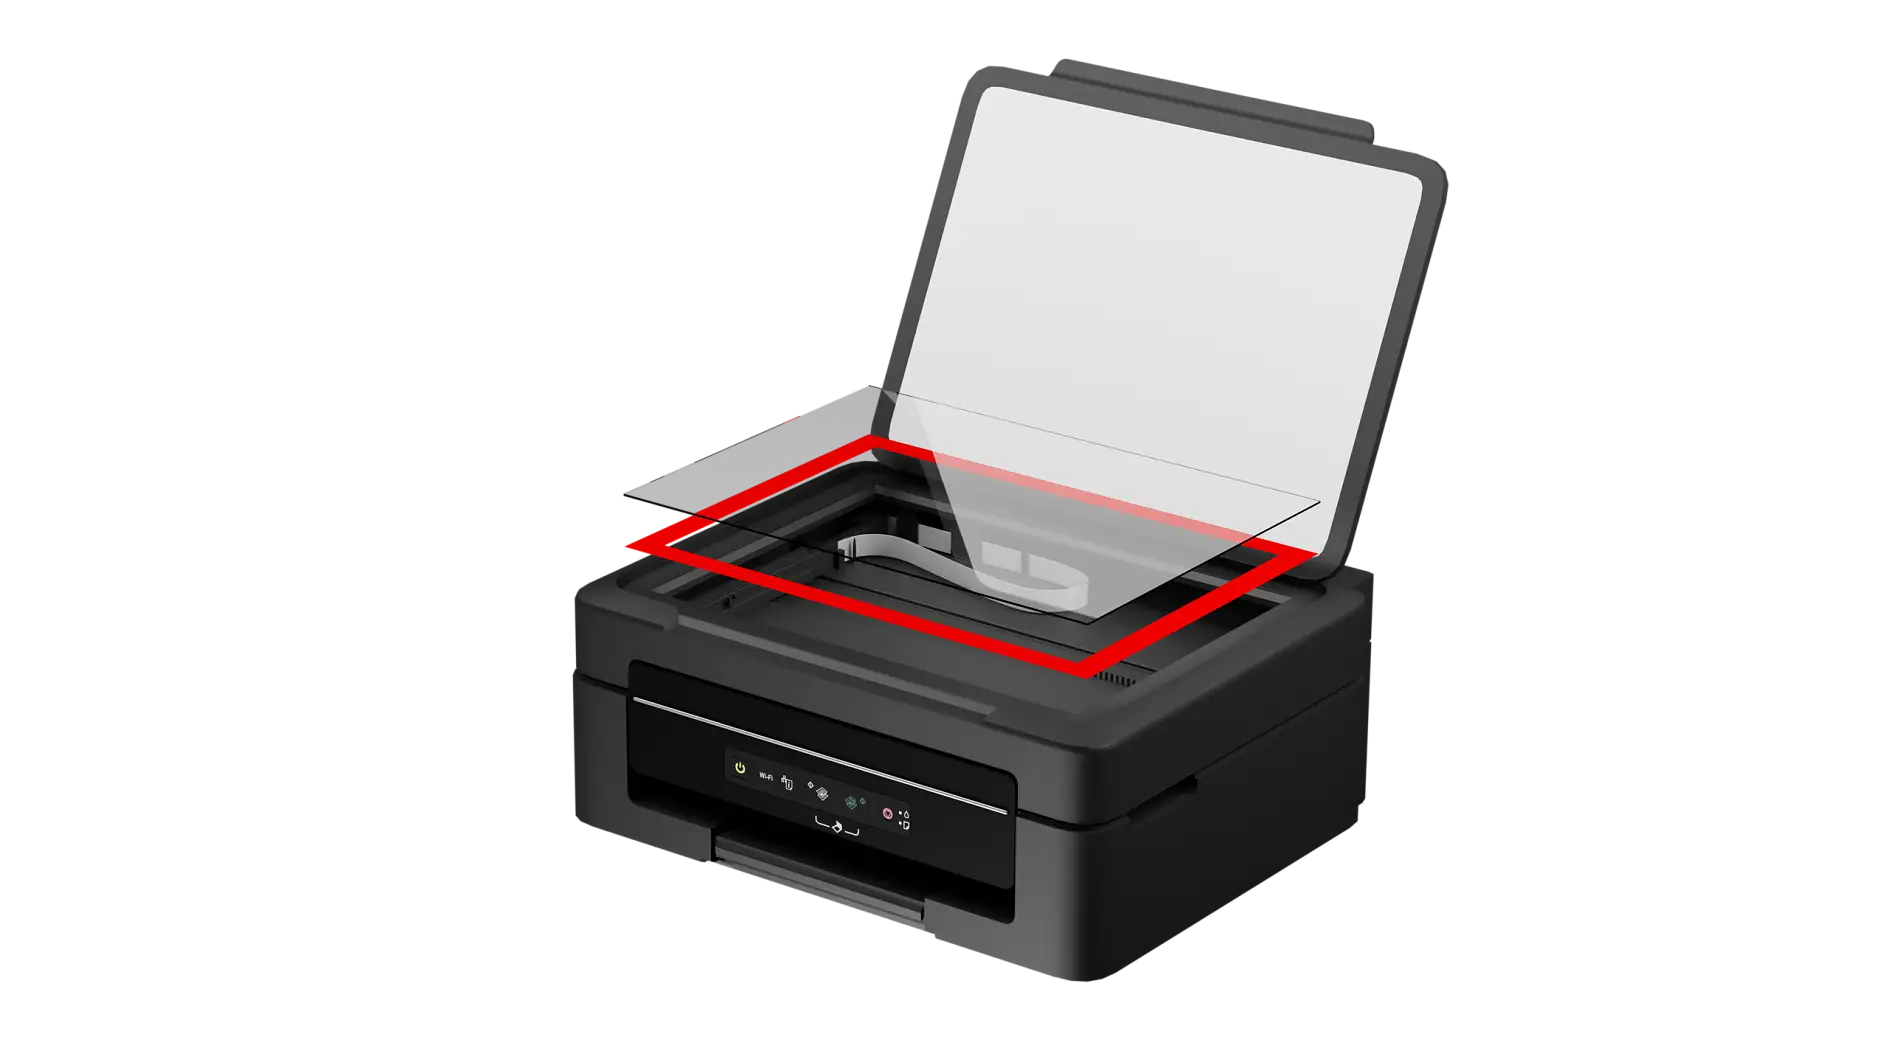 Sklo skenera sa montuje na teleso tlačiarne obojstrannou páskou.